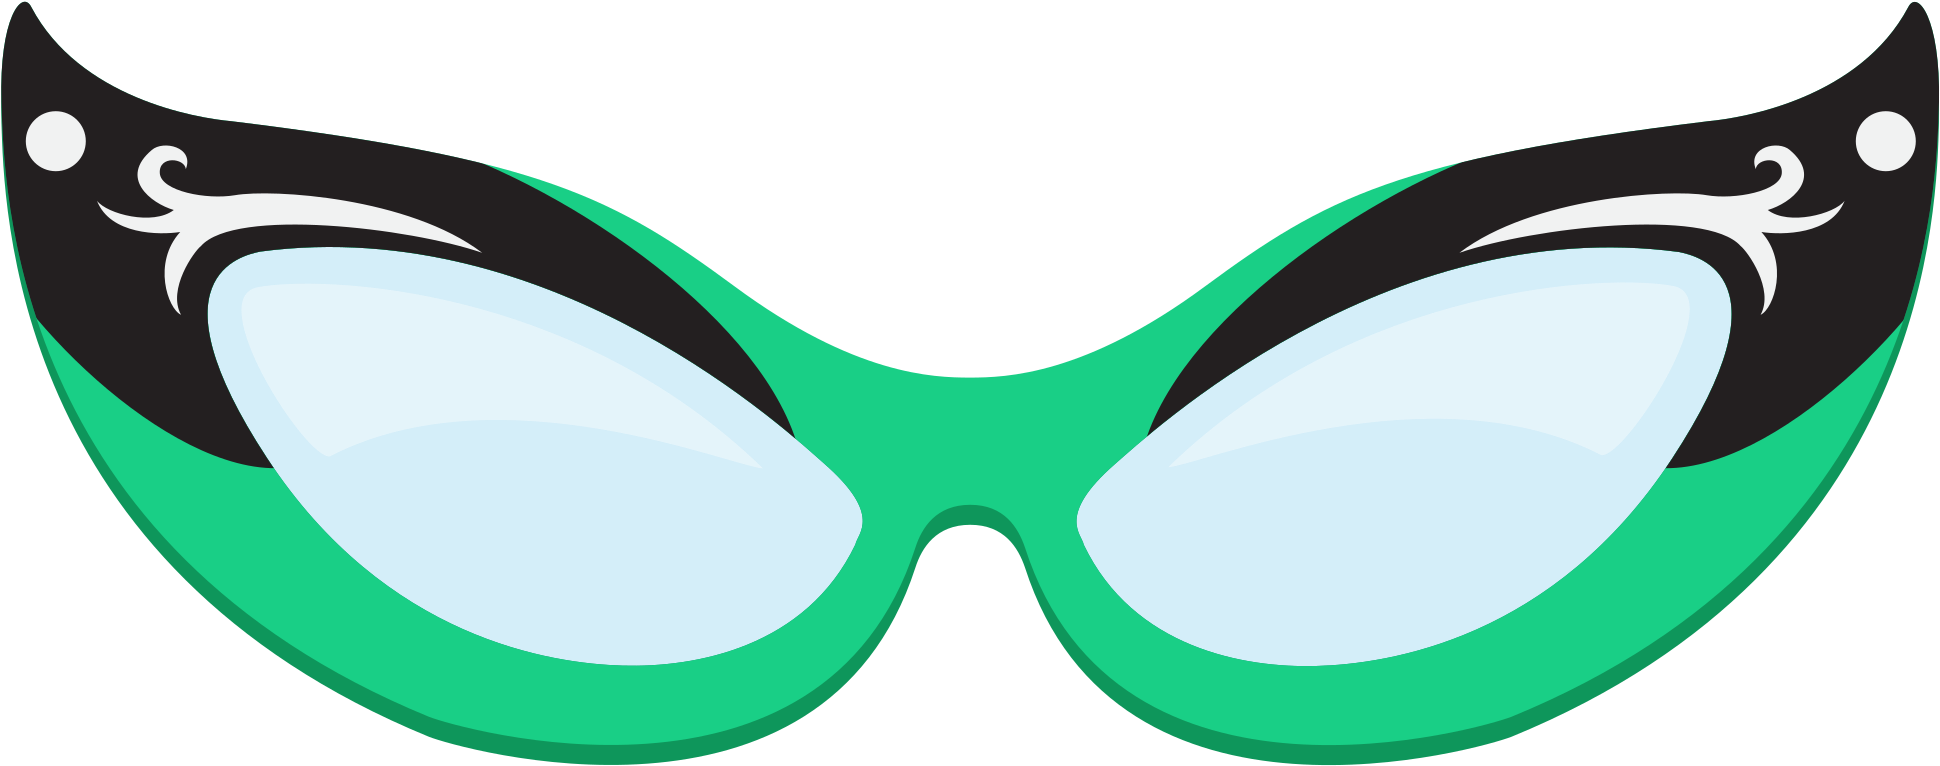 Stylized Cat Eye Sunglasses Vector